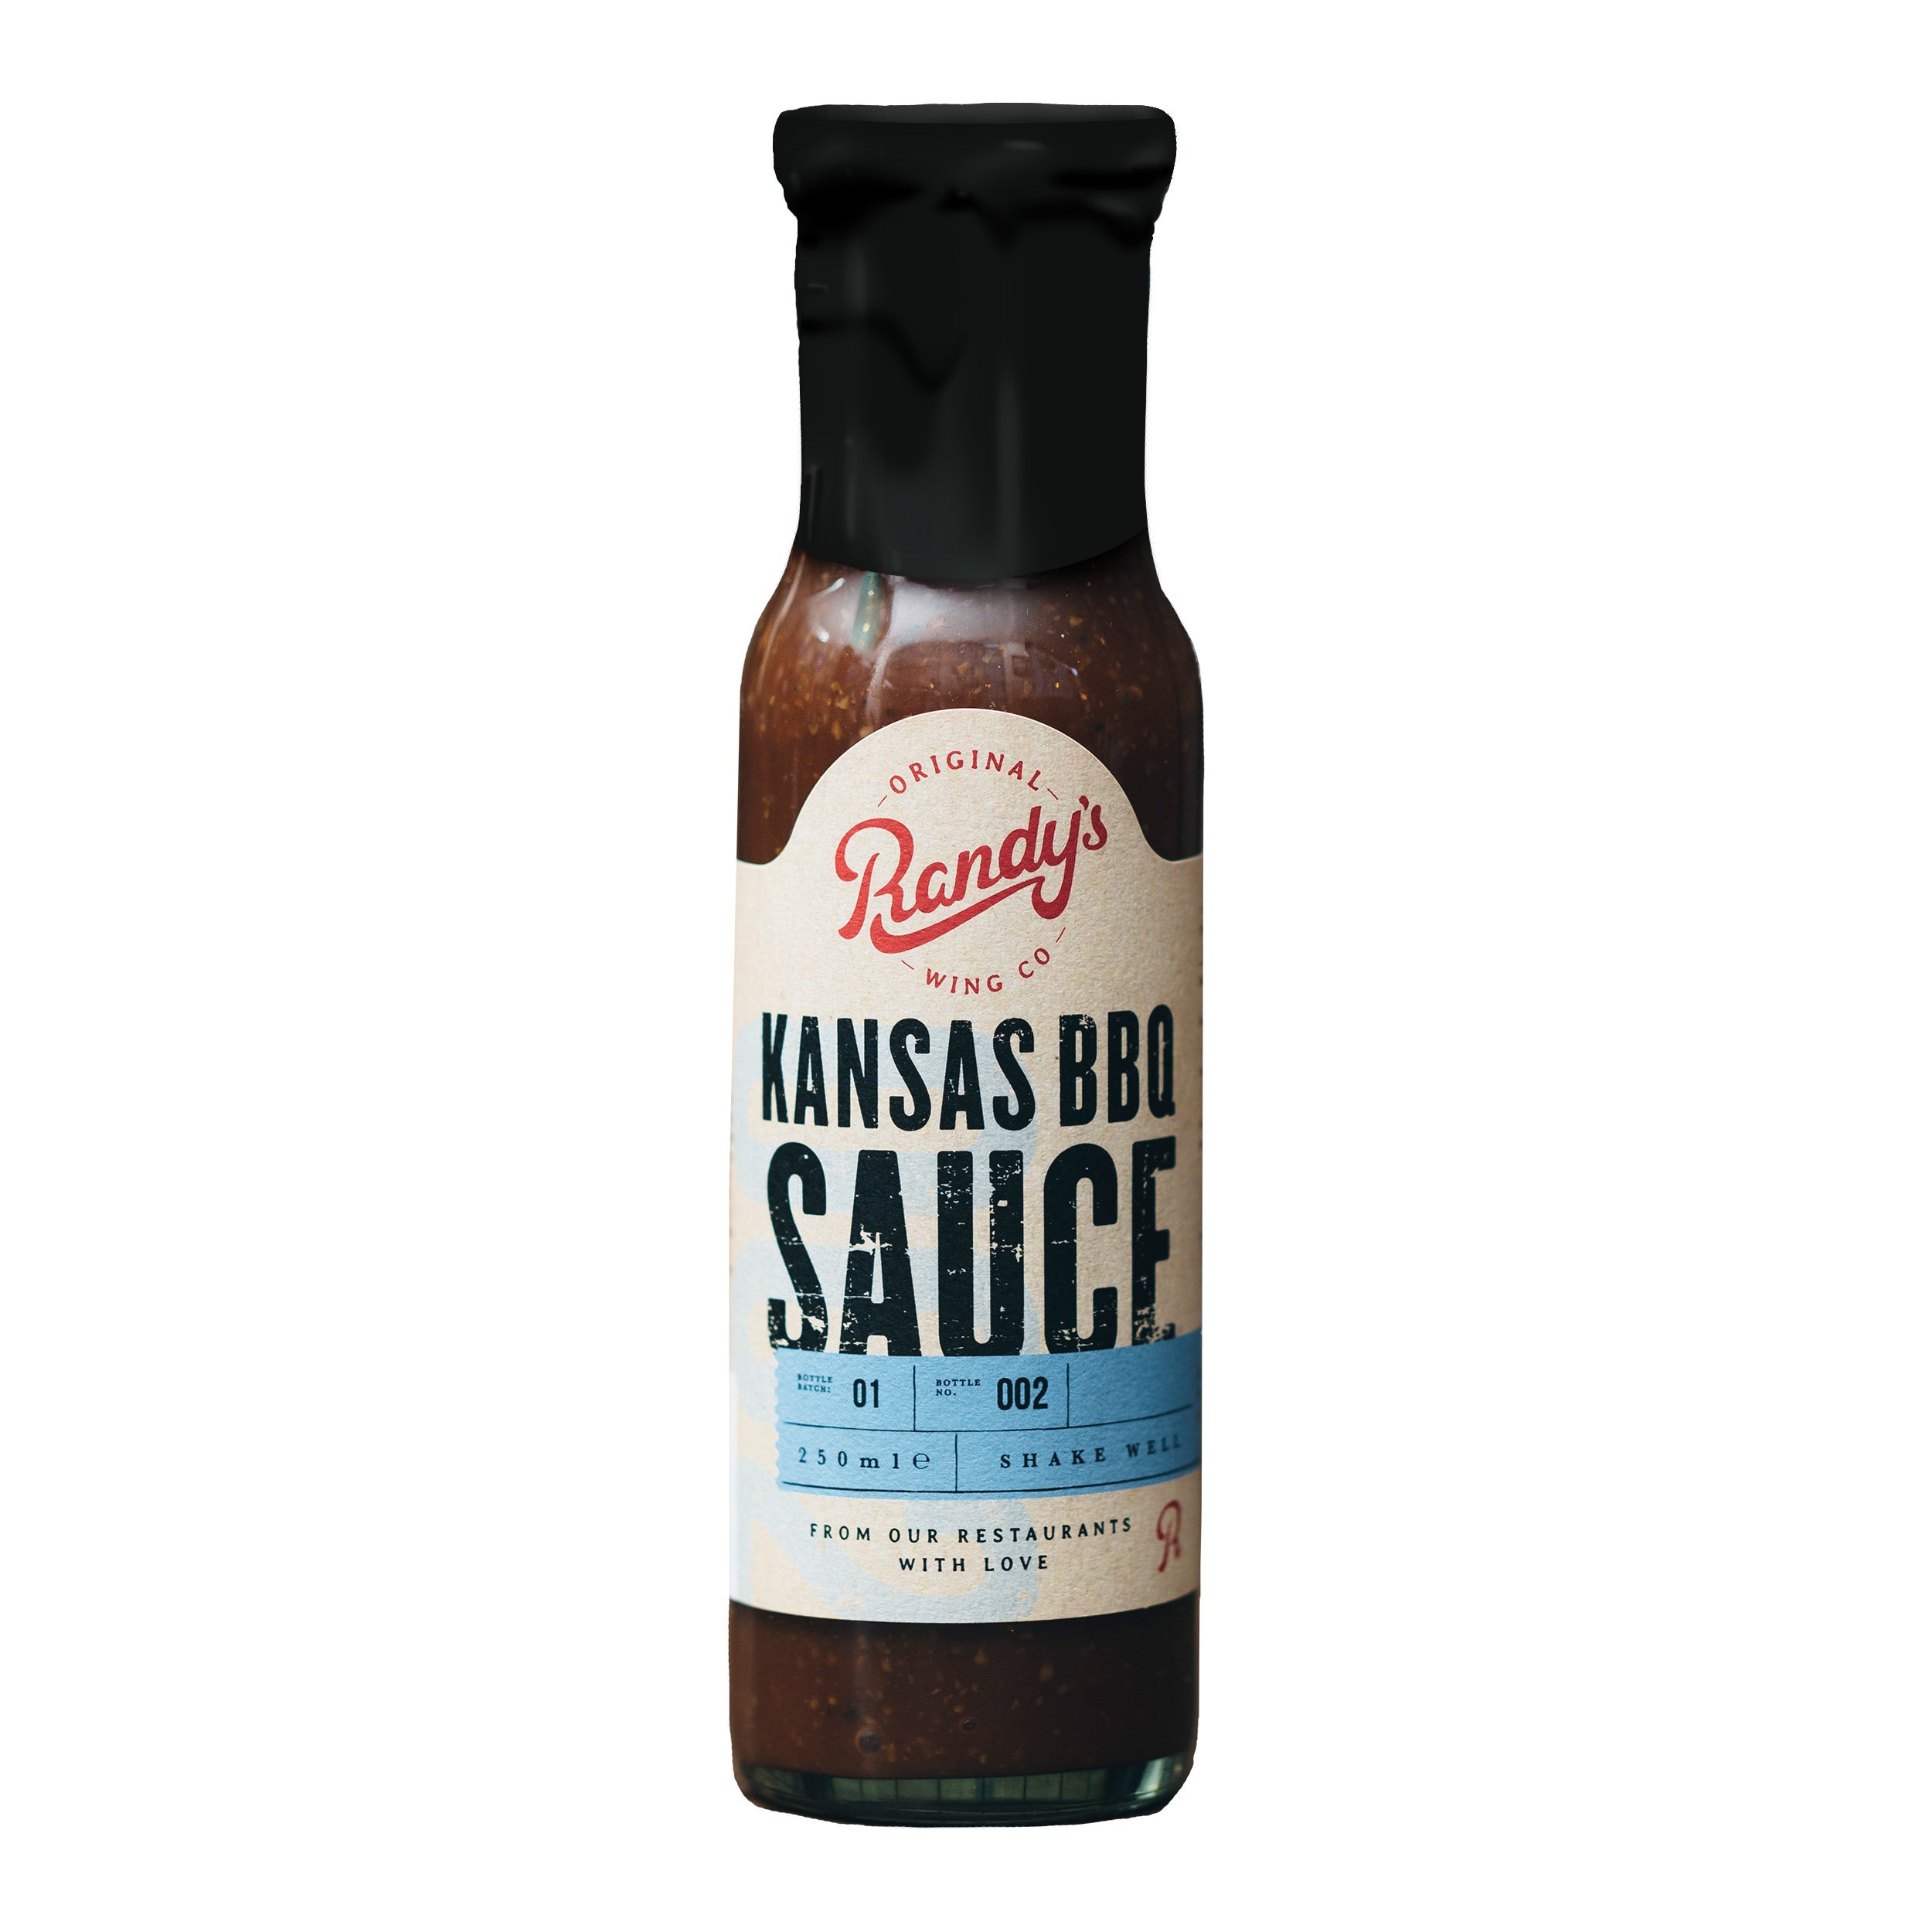 Kansas BBQ Sauce (Ltd Edition)